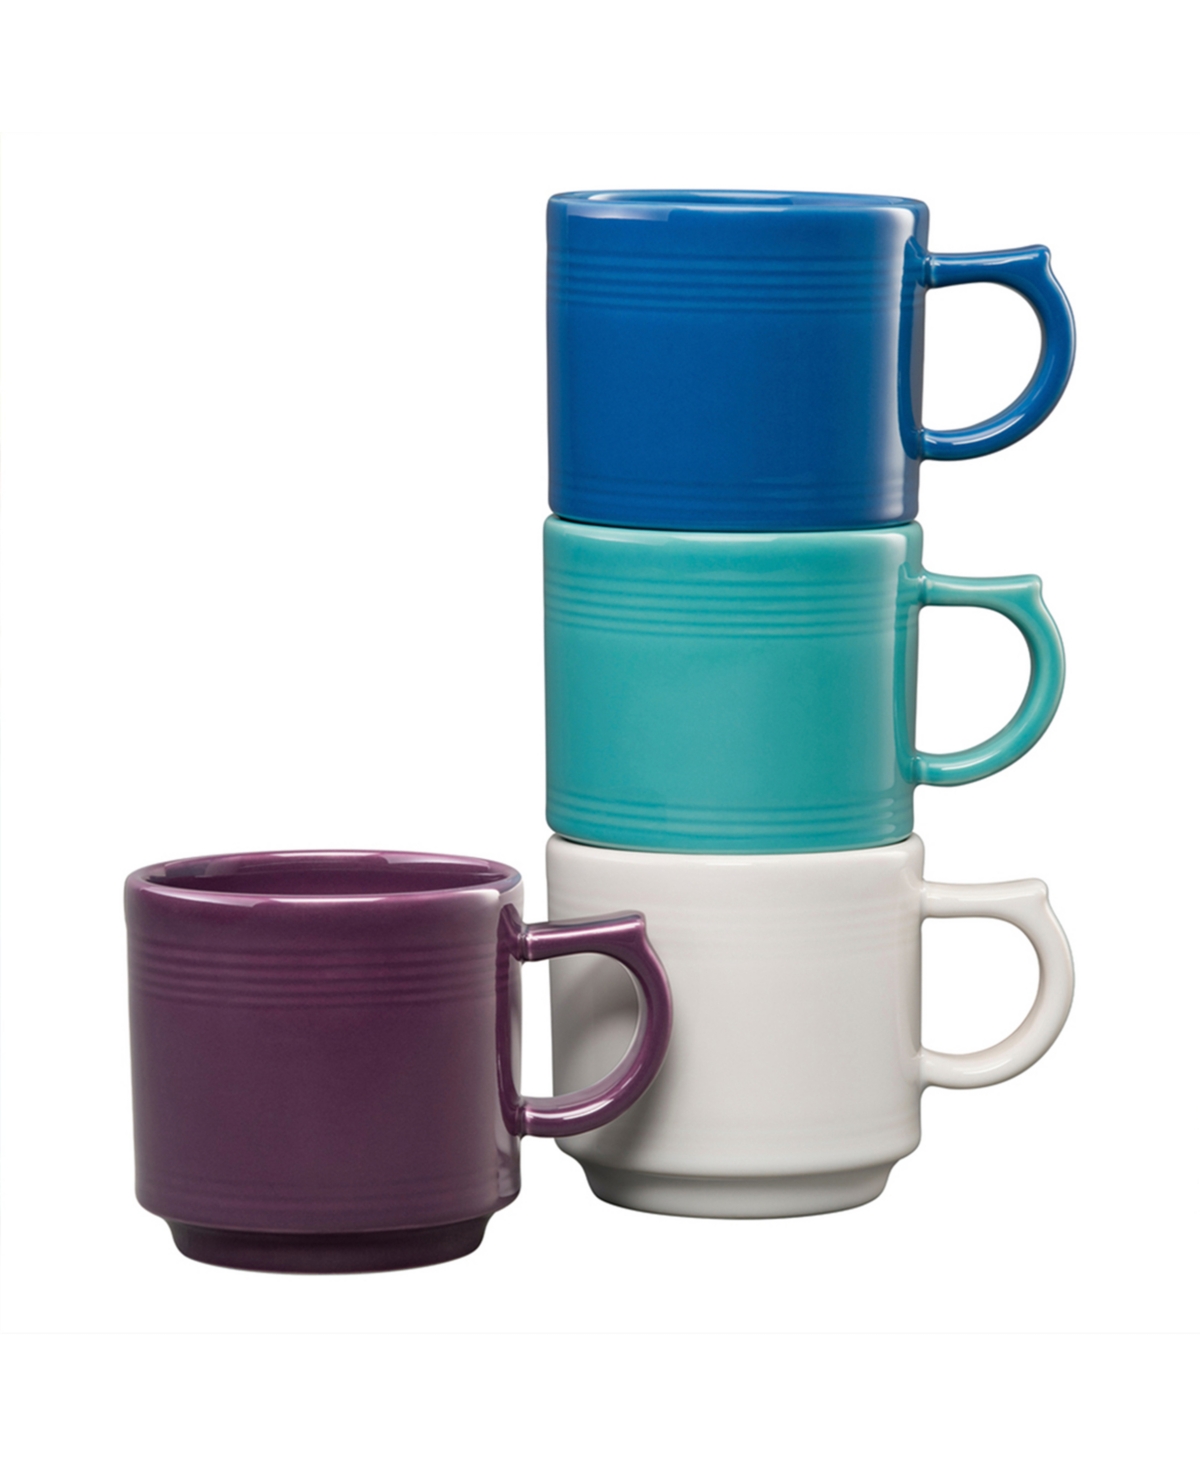 Stackable Mugs, Set of 4 - Coastal Bl